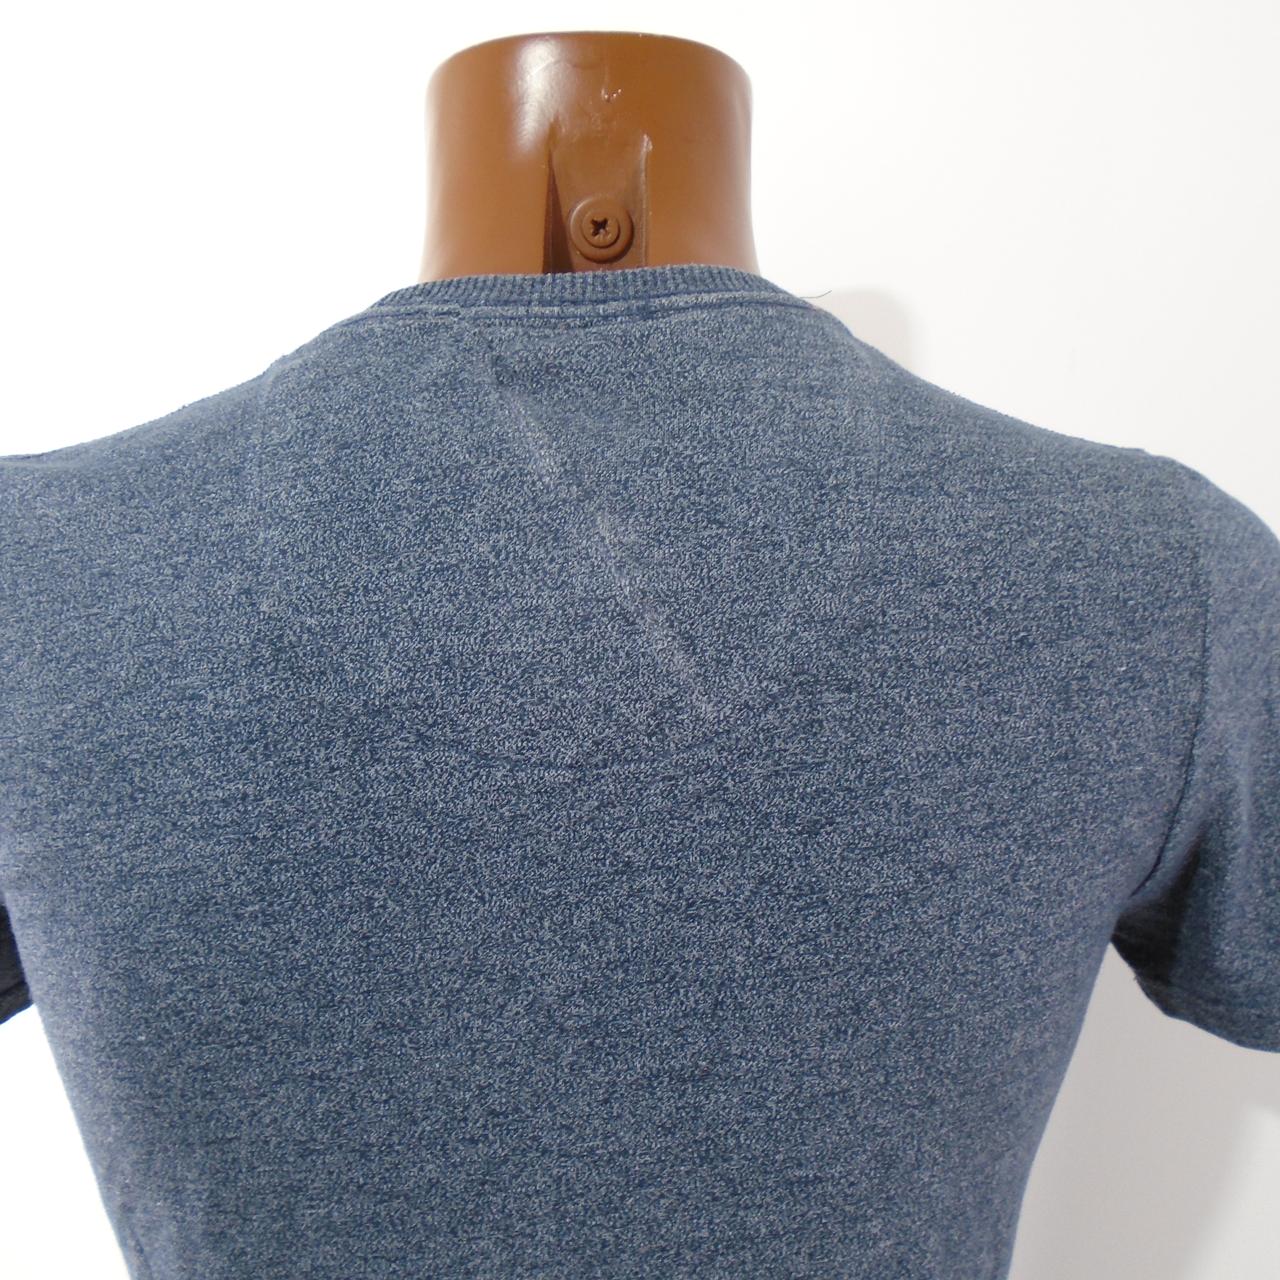 Men's T-Shirt Superdry. Grey. XS. Used. Good